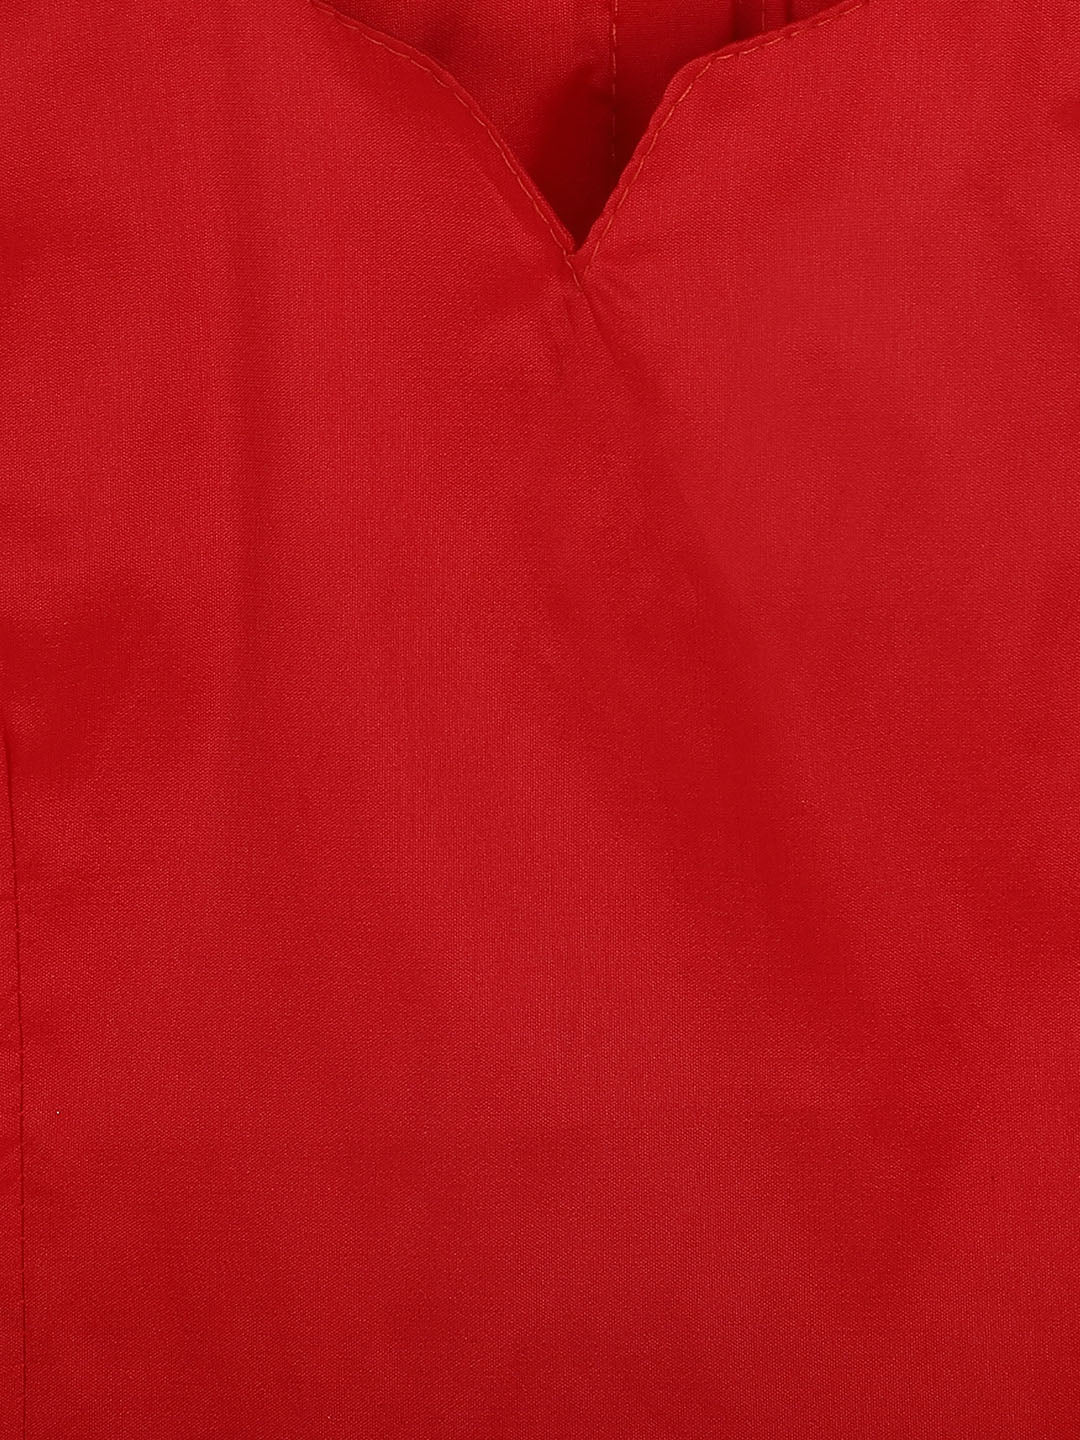 BownBee Short Sleeves Flower Design Pavda Pattu Lehenga - Red